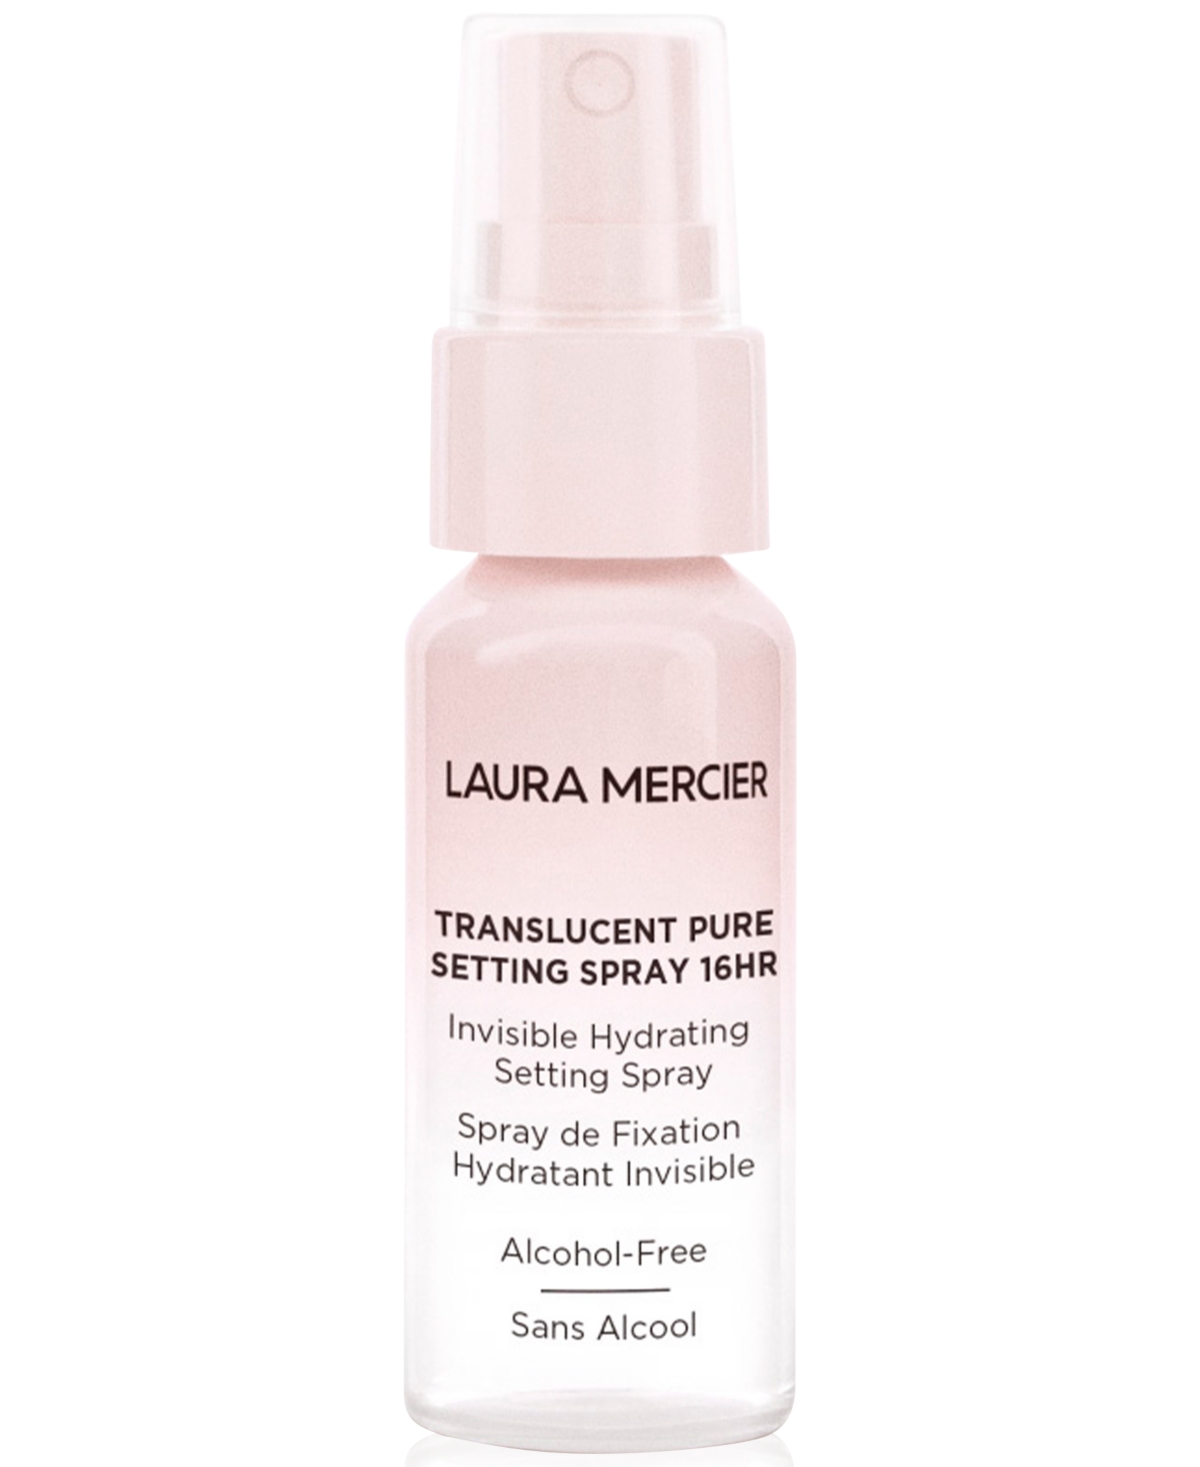 Laura Mercier Travel-size Translucent Pure Setting Spray 16hr